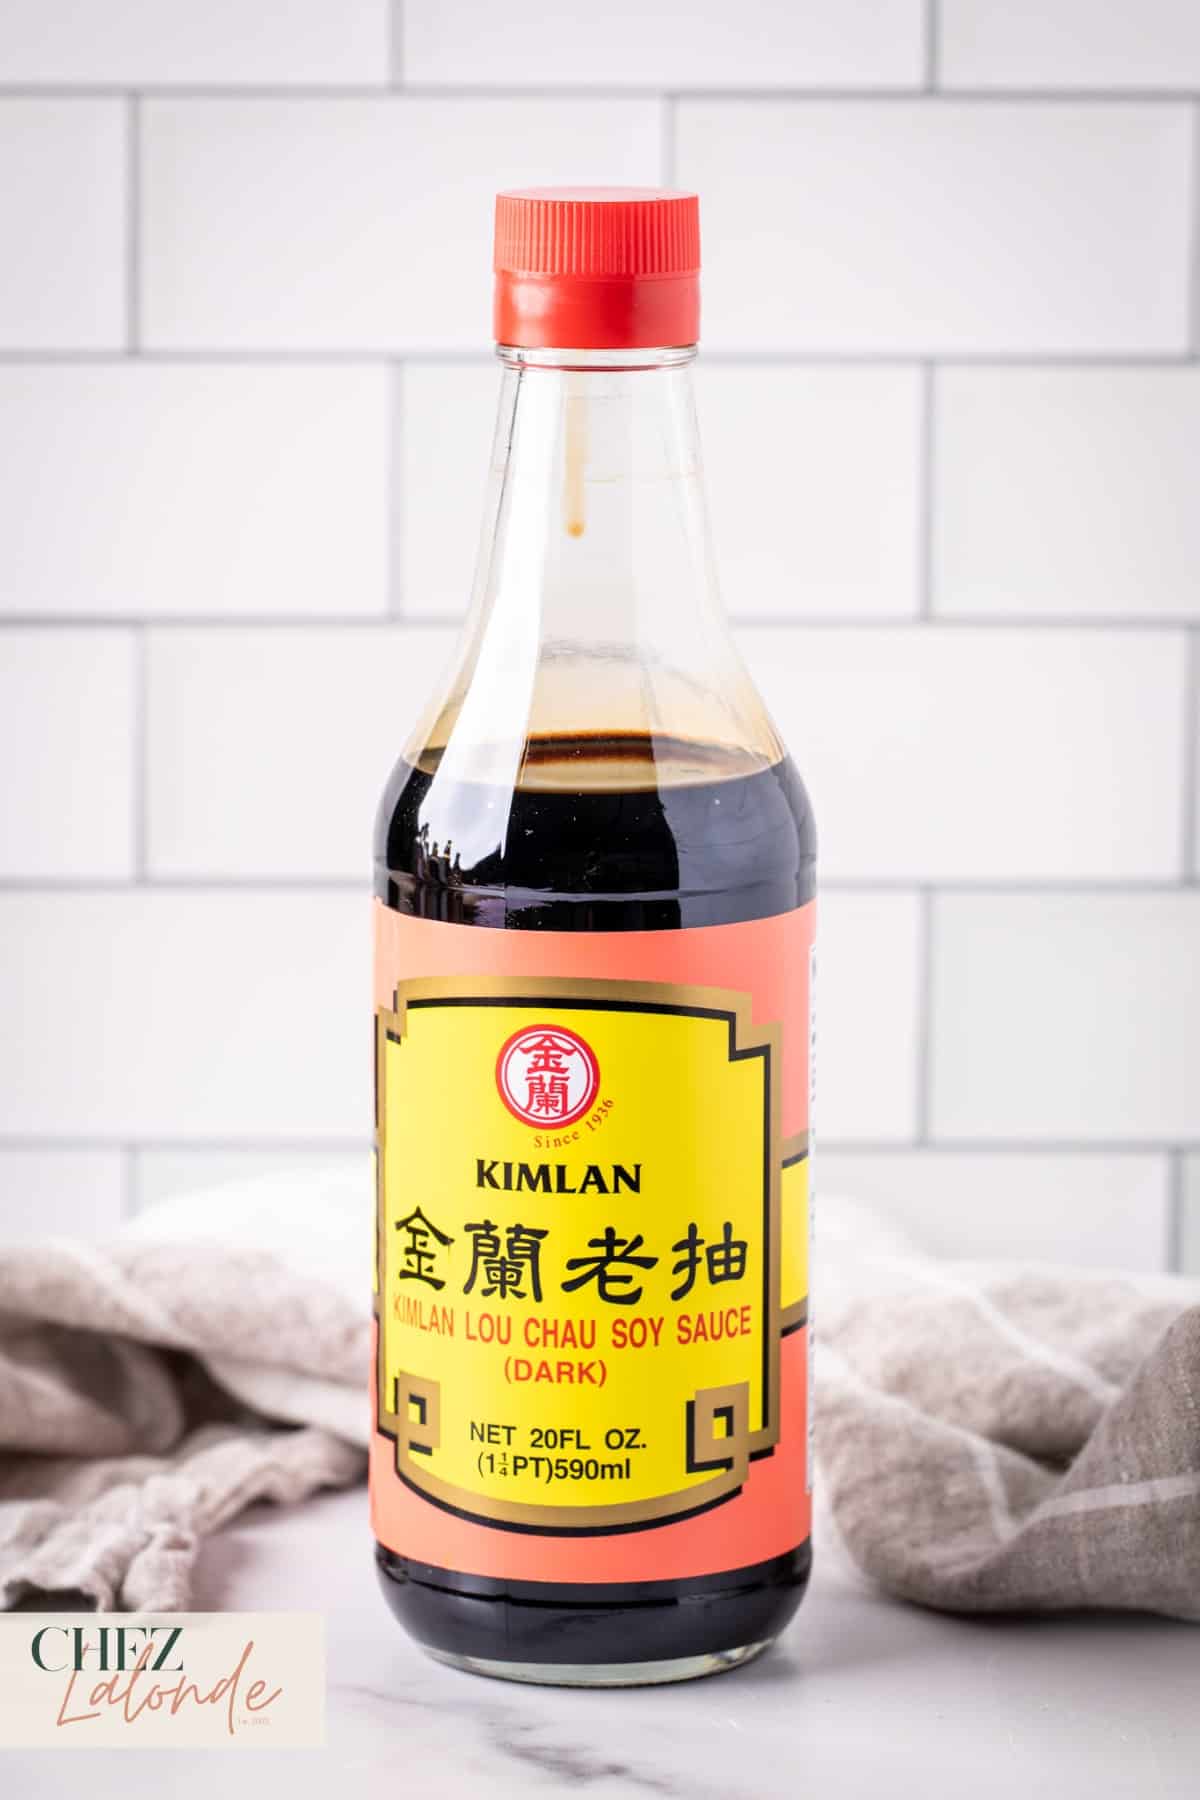 A bottle of Kimlan Dark Soy Sauce.